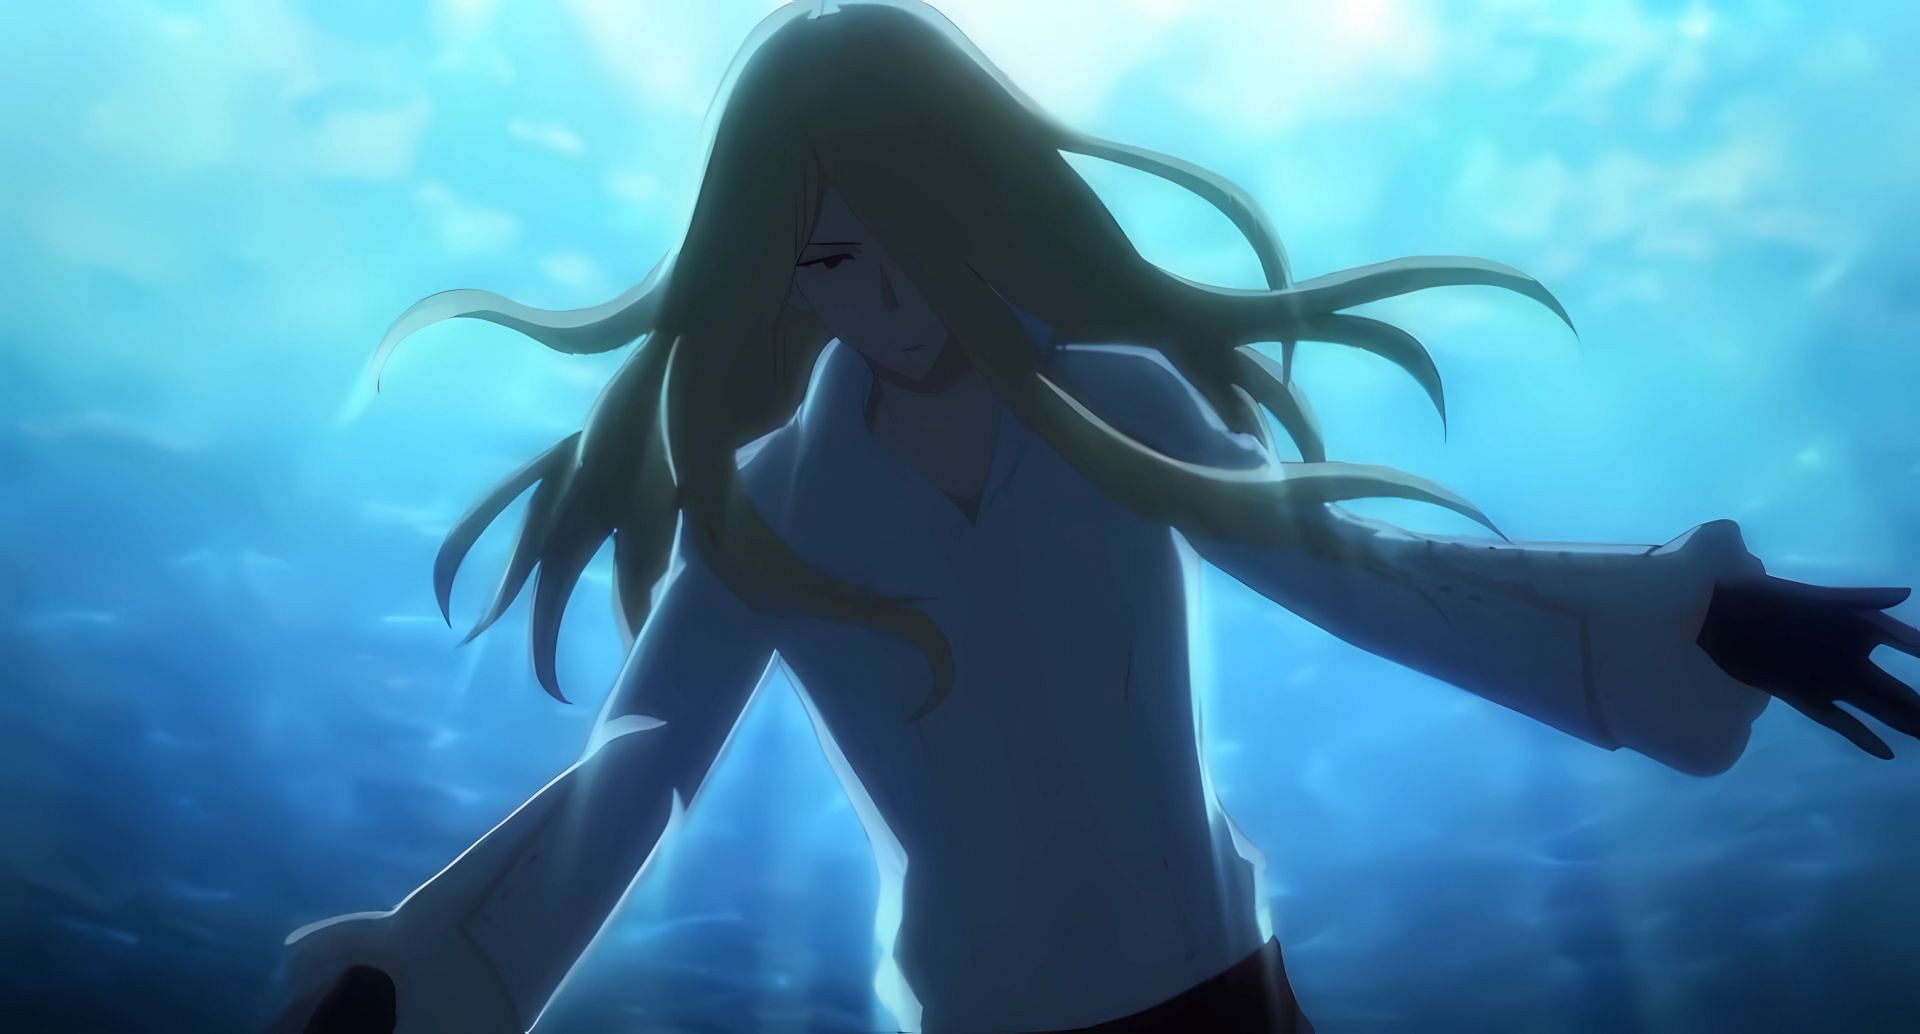 Komori as seen in the anime (Image via Studio Blanc)